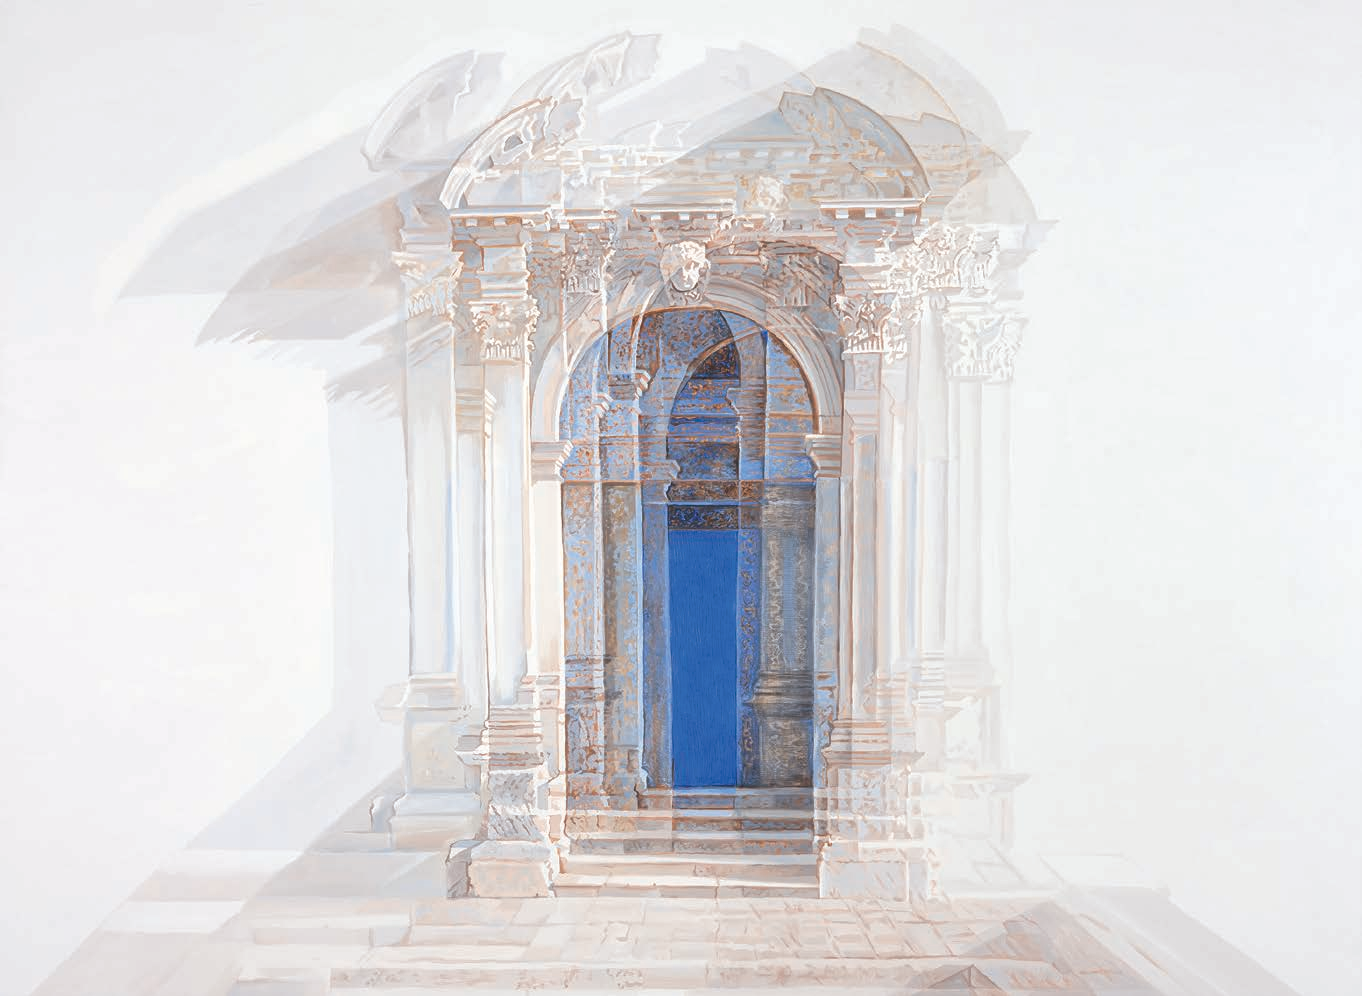 Porta delle Terese 51, 2019 Huile sur toile, 140 x 190 cm © Roger de Montebello